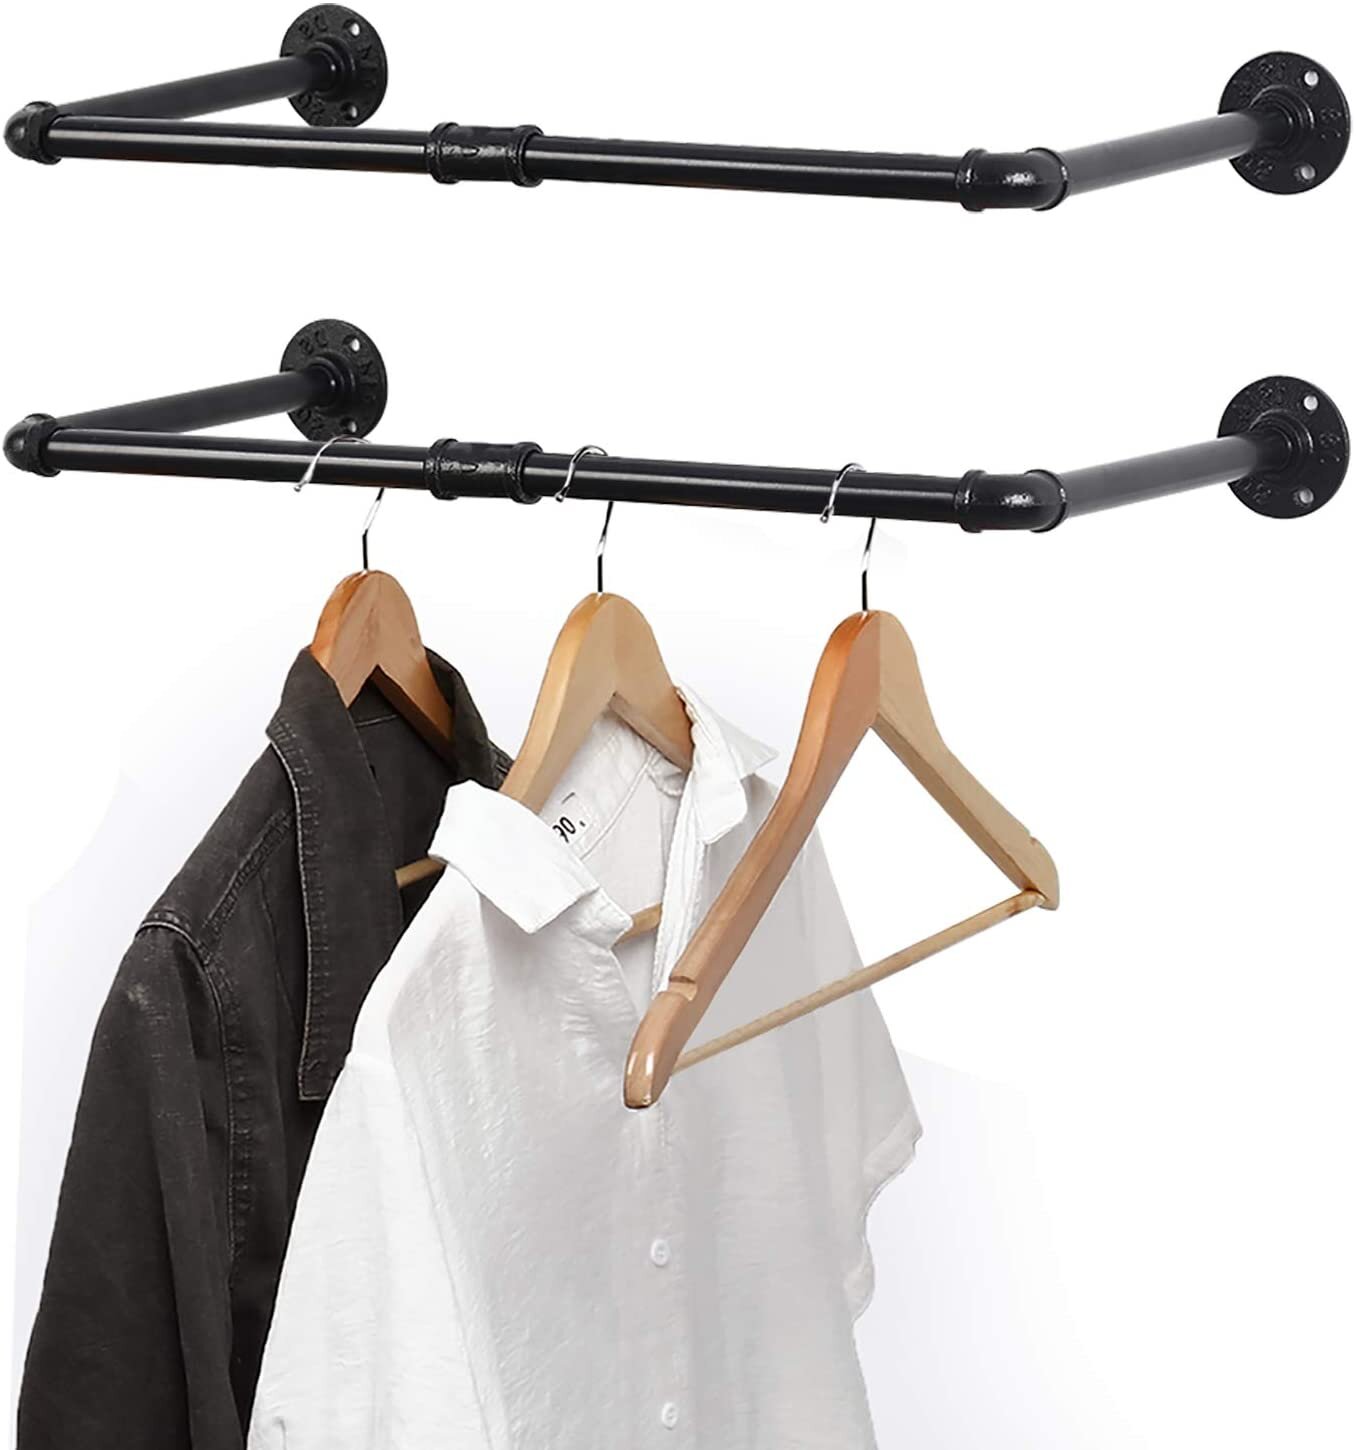 Metal Clothes Hangers Heavy Duty Clothes Racks set of 5 